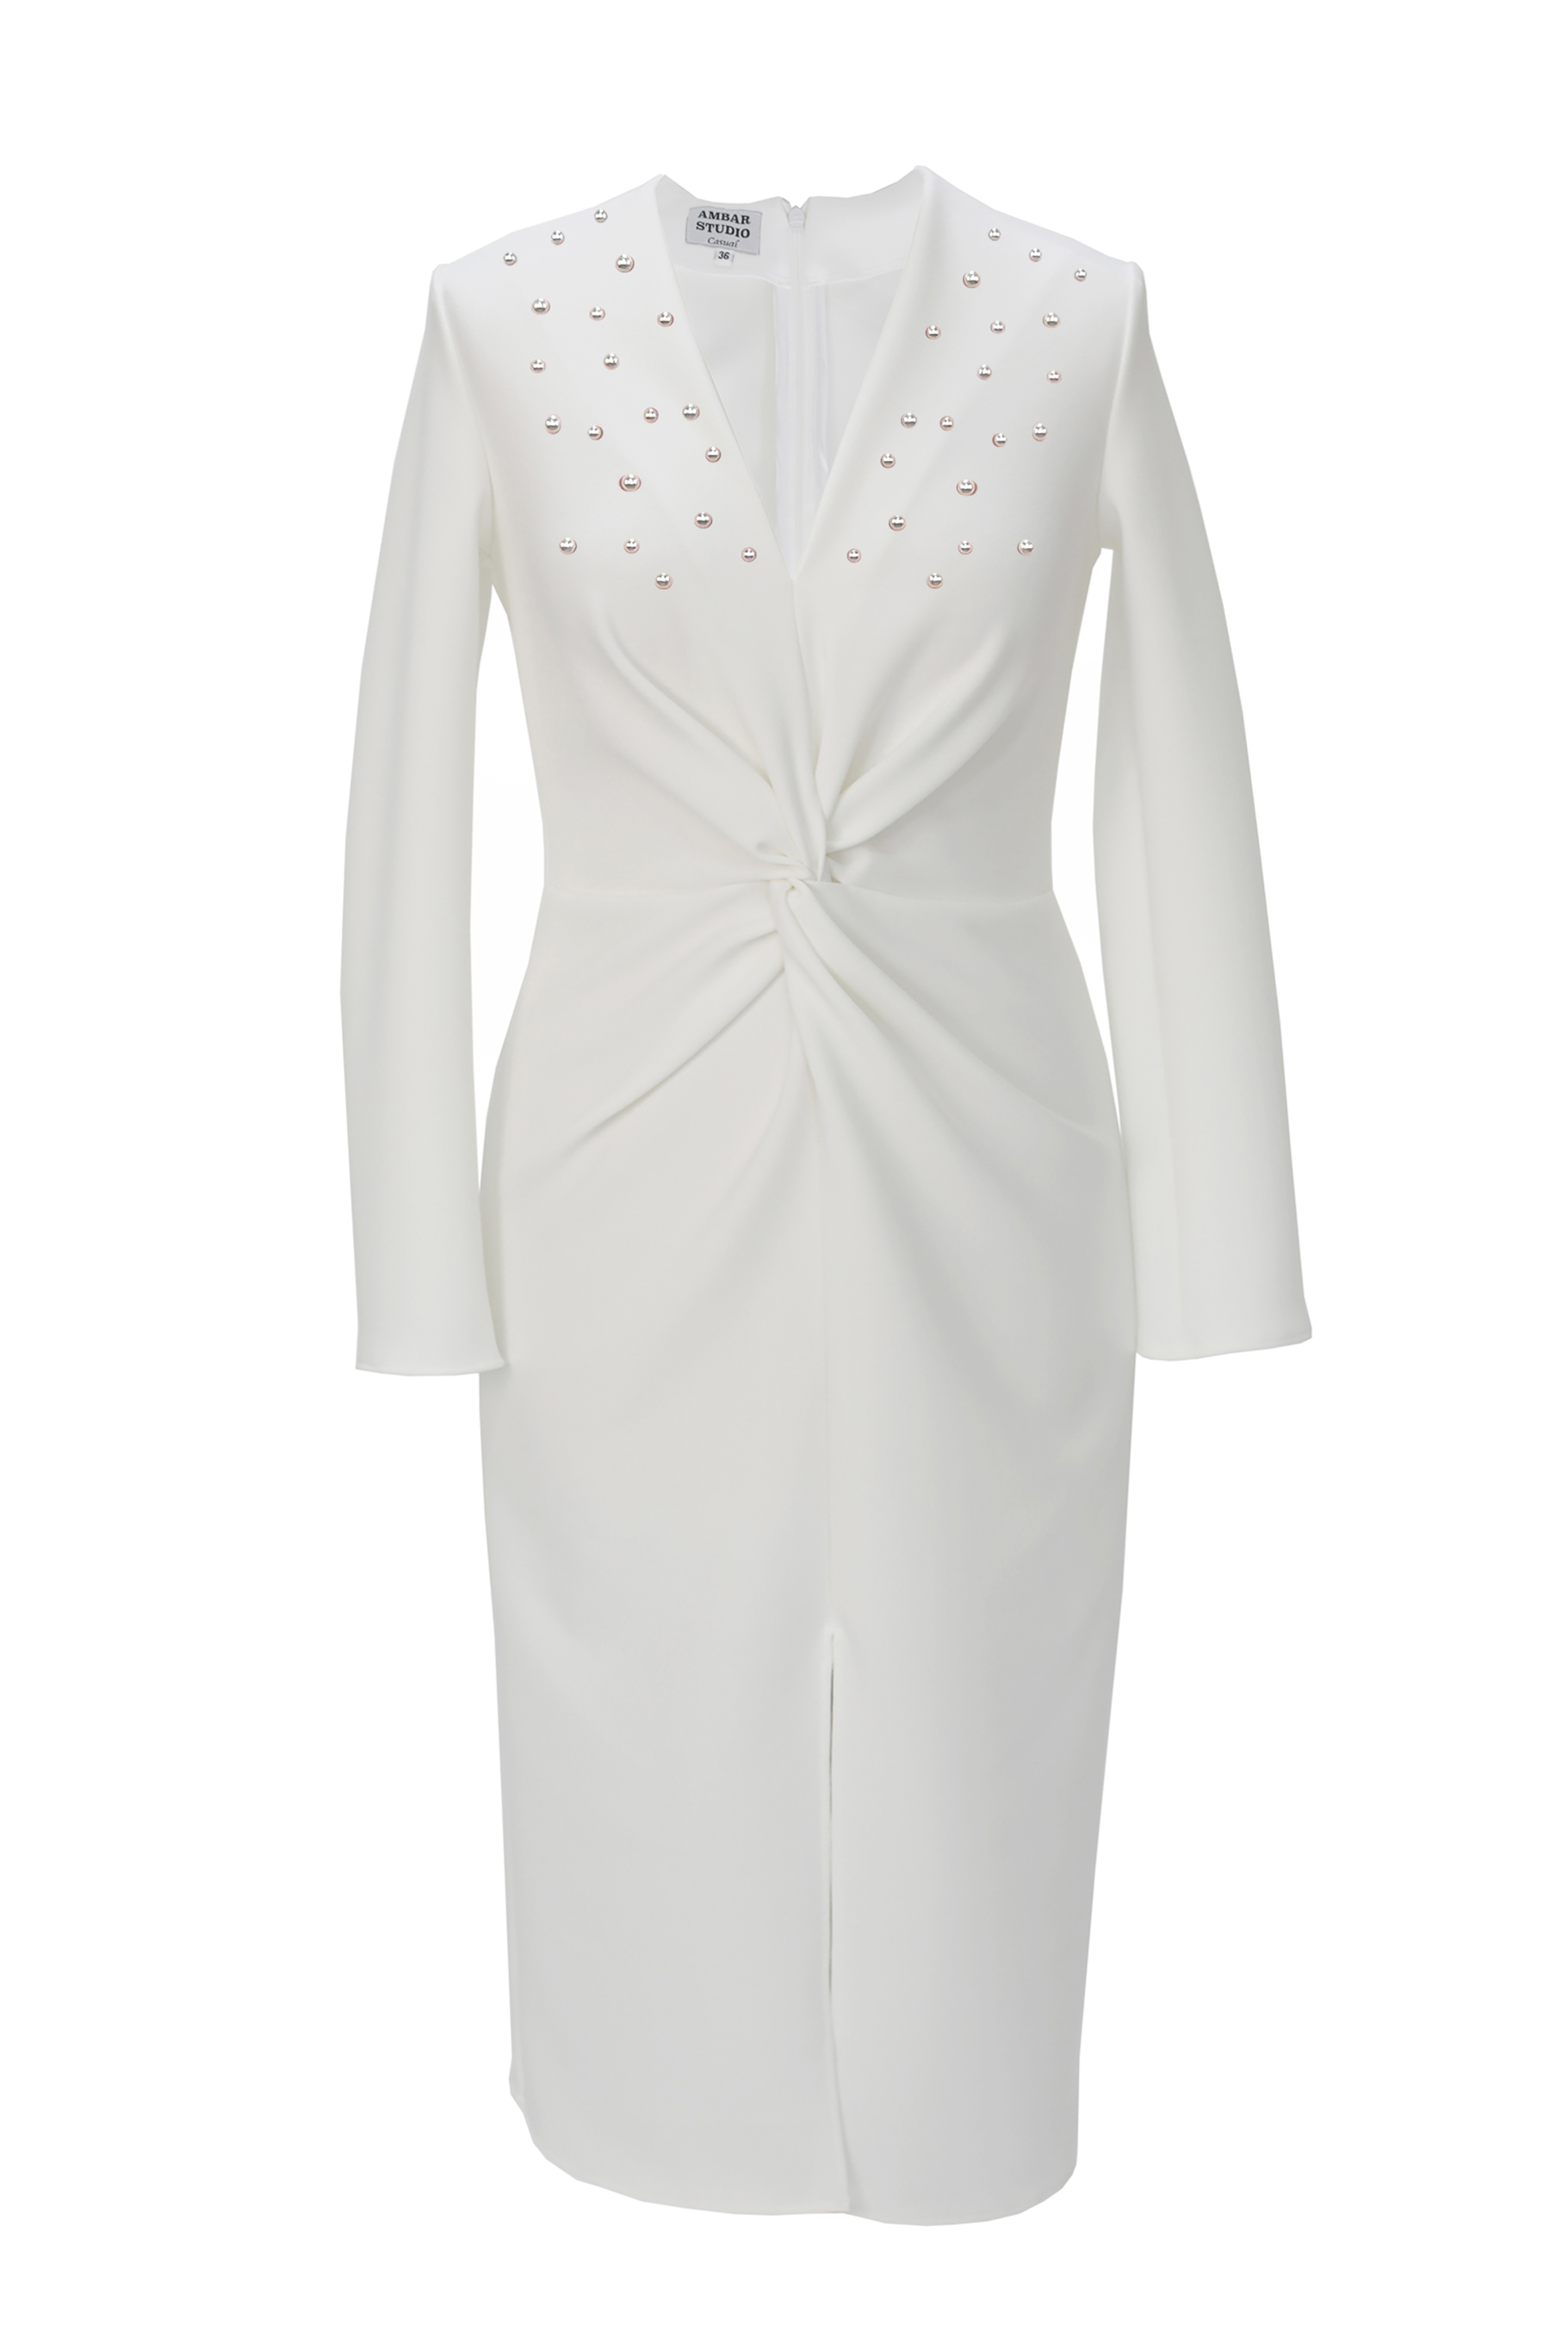 R24111 - WHITE 01-Jackie-white-dress with pearls-ambar-studio